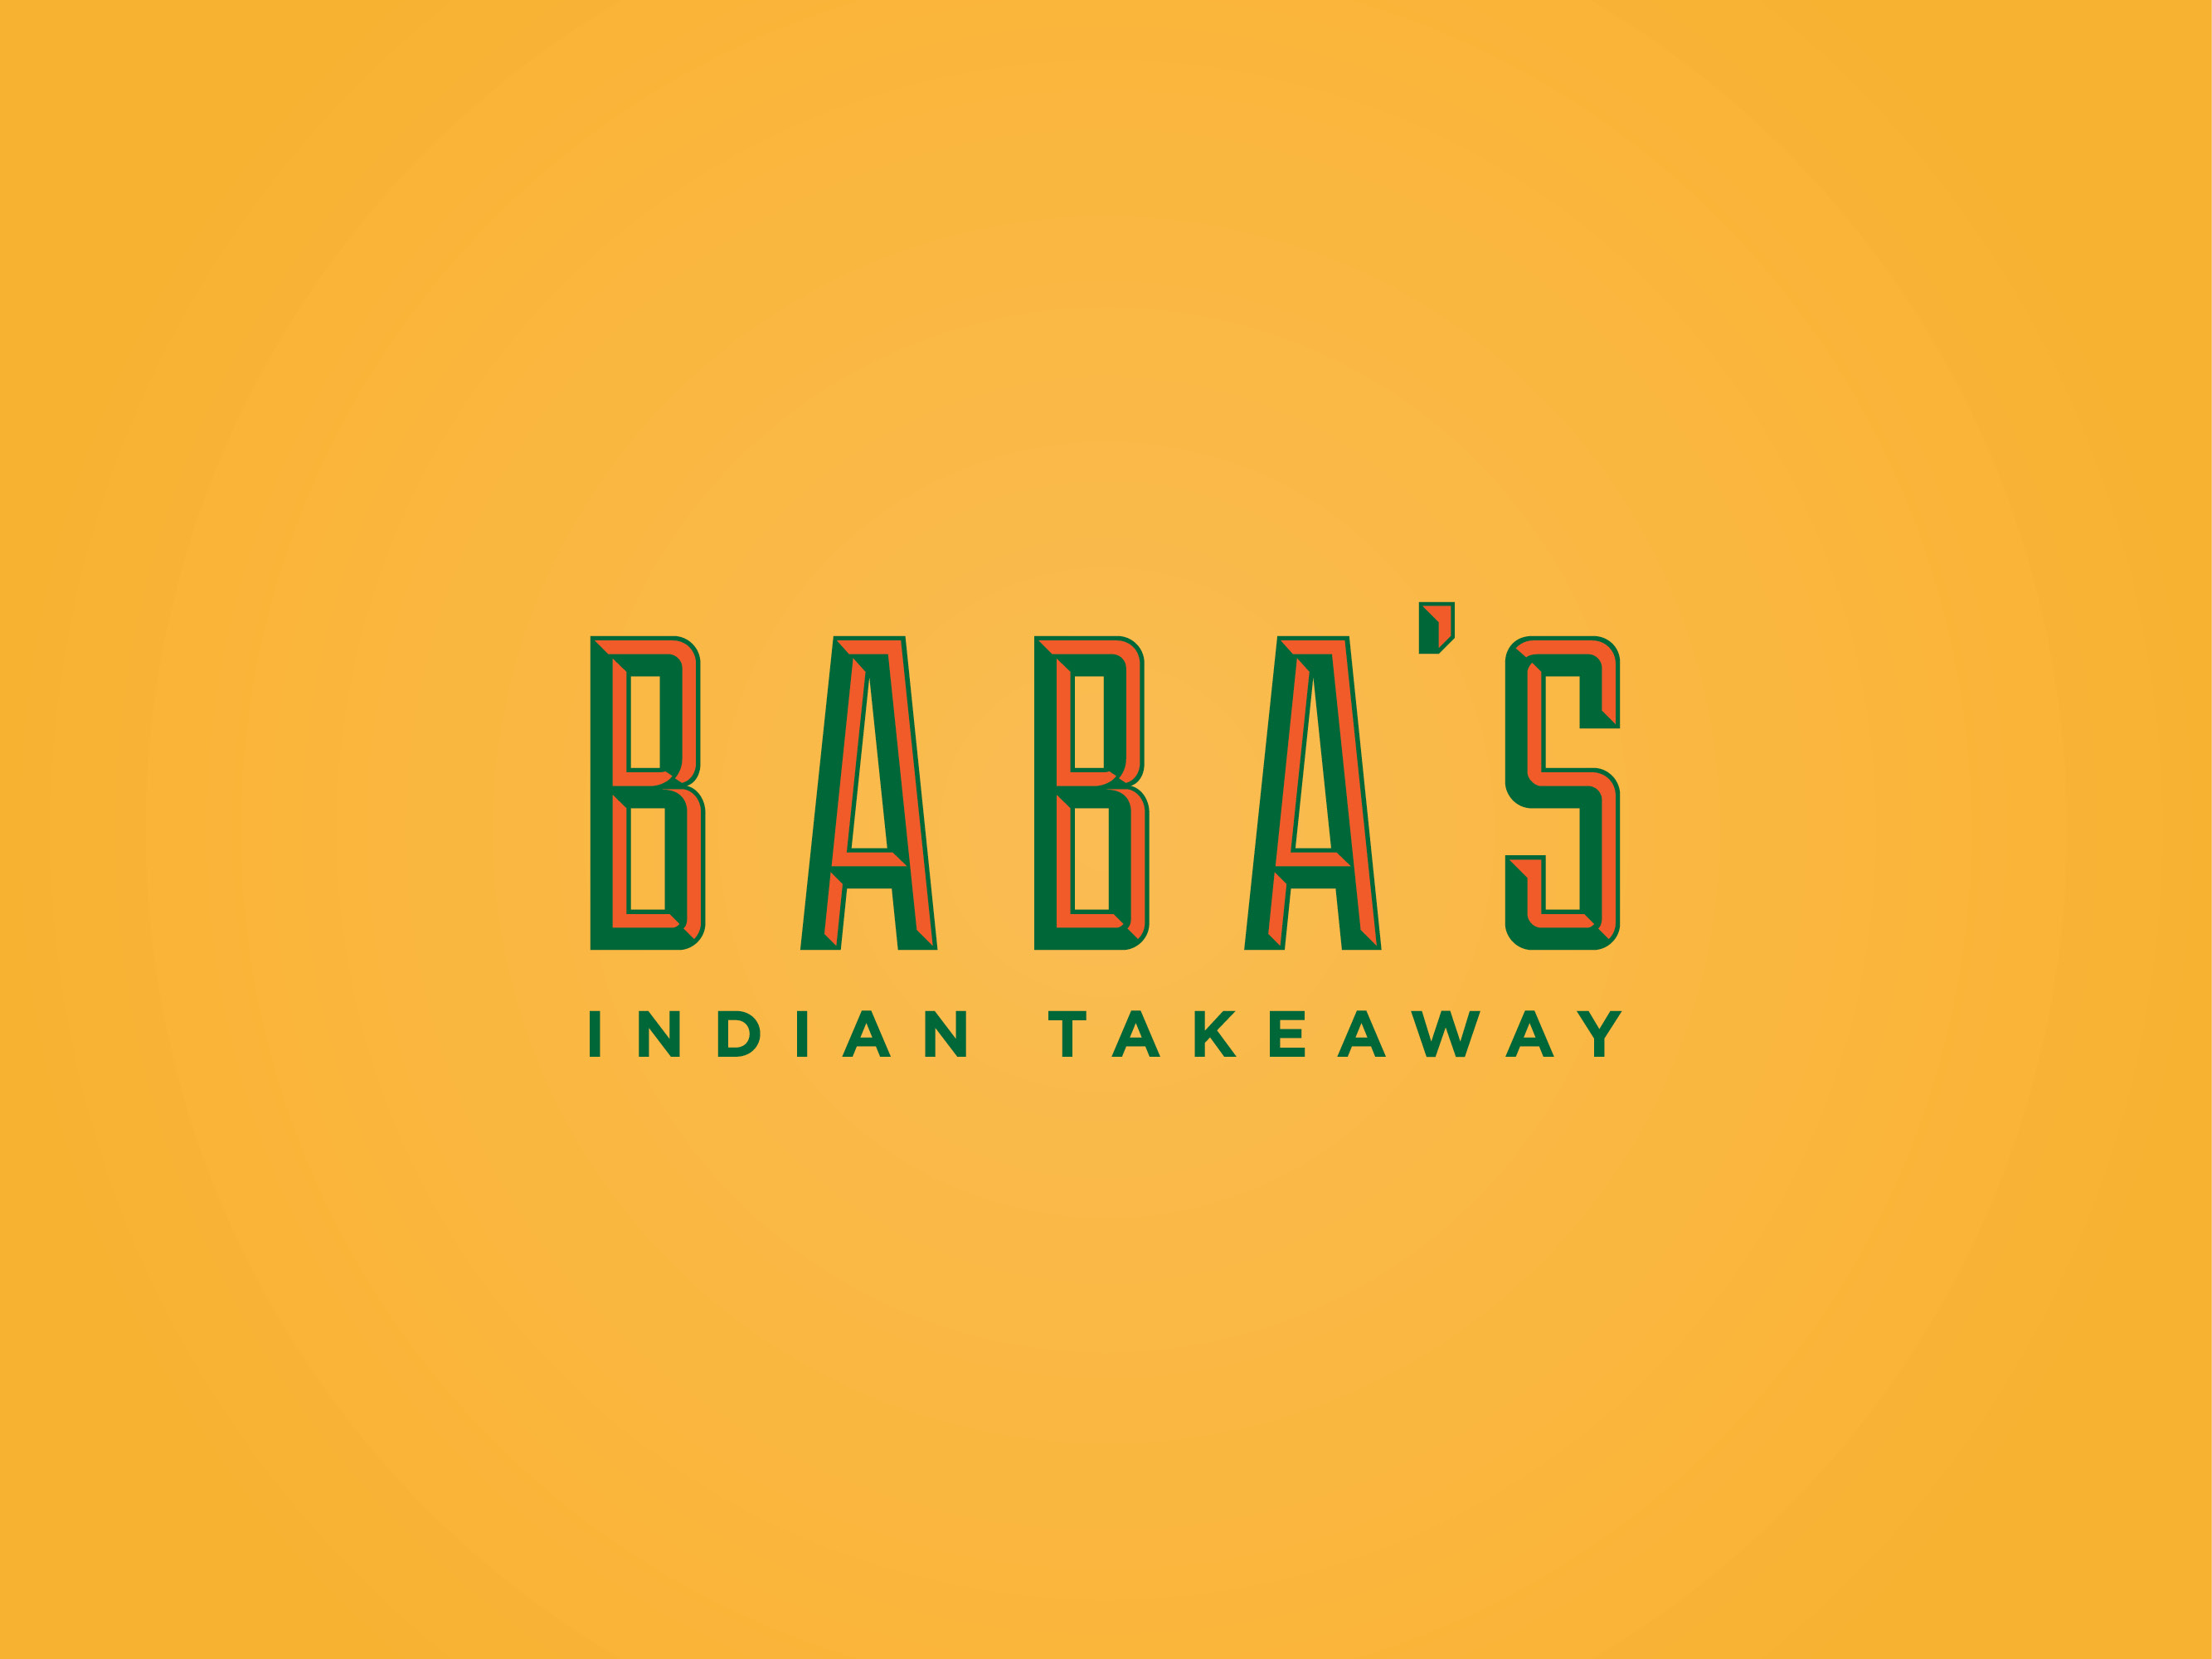 Babas indian takeaway brand identity and menu design